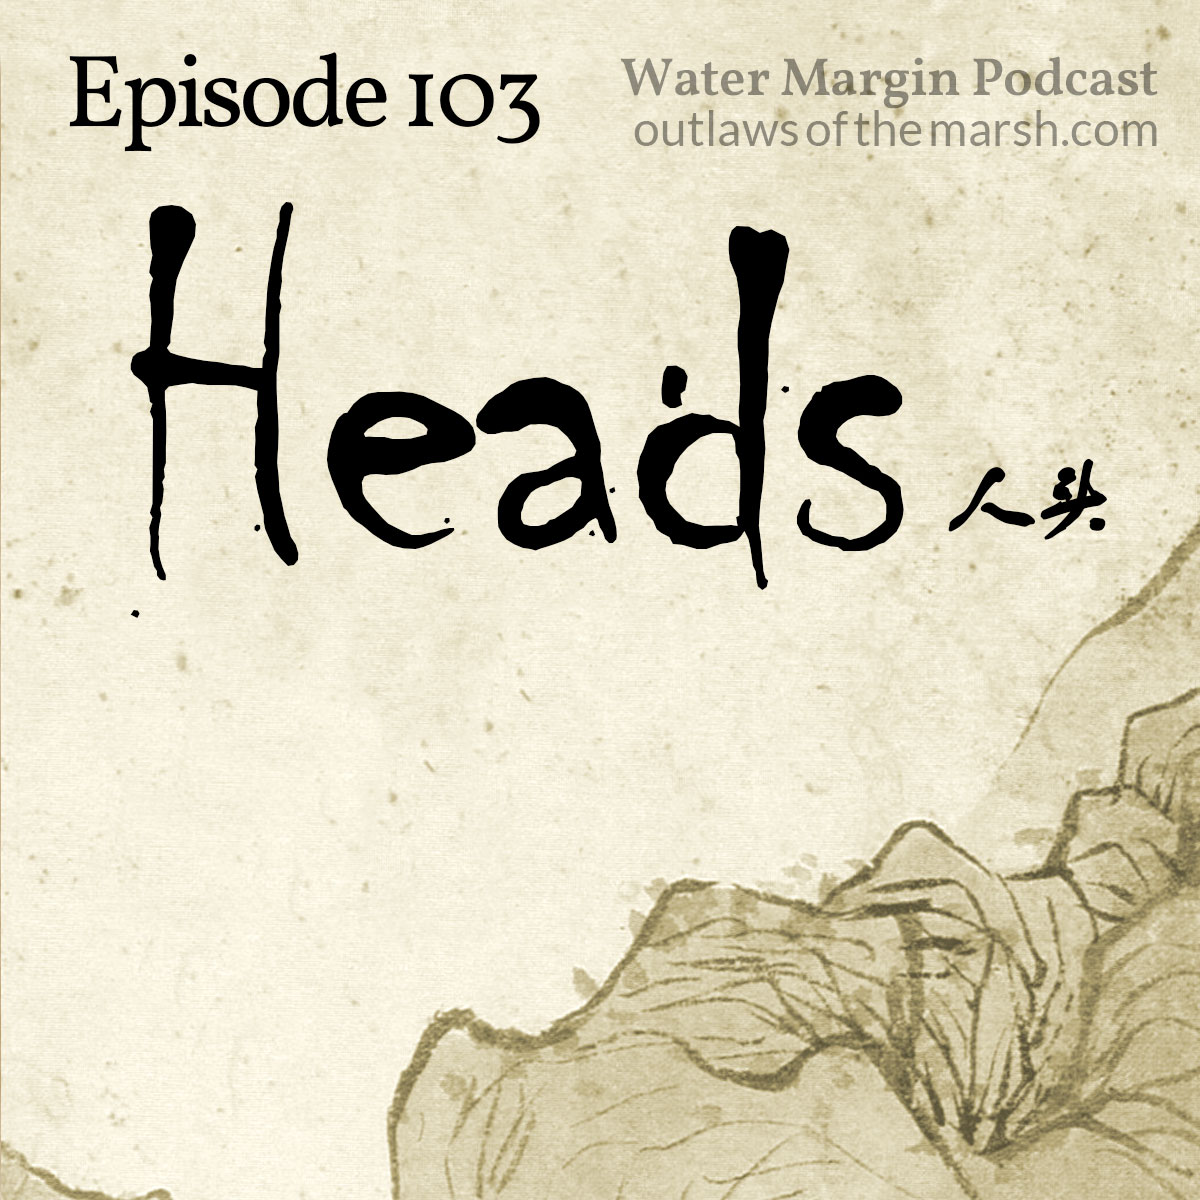 Water Margin Podcast: Episode 103